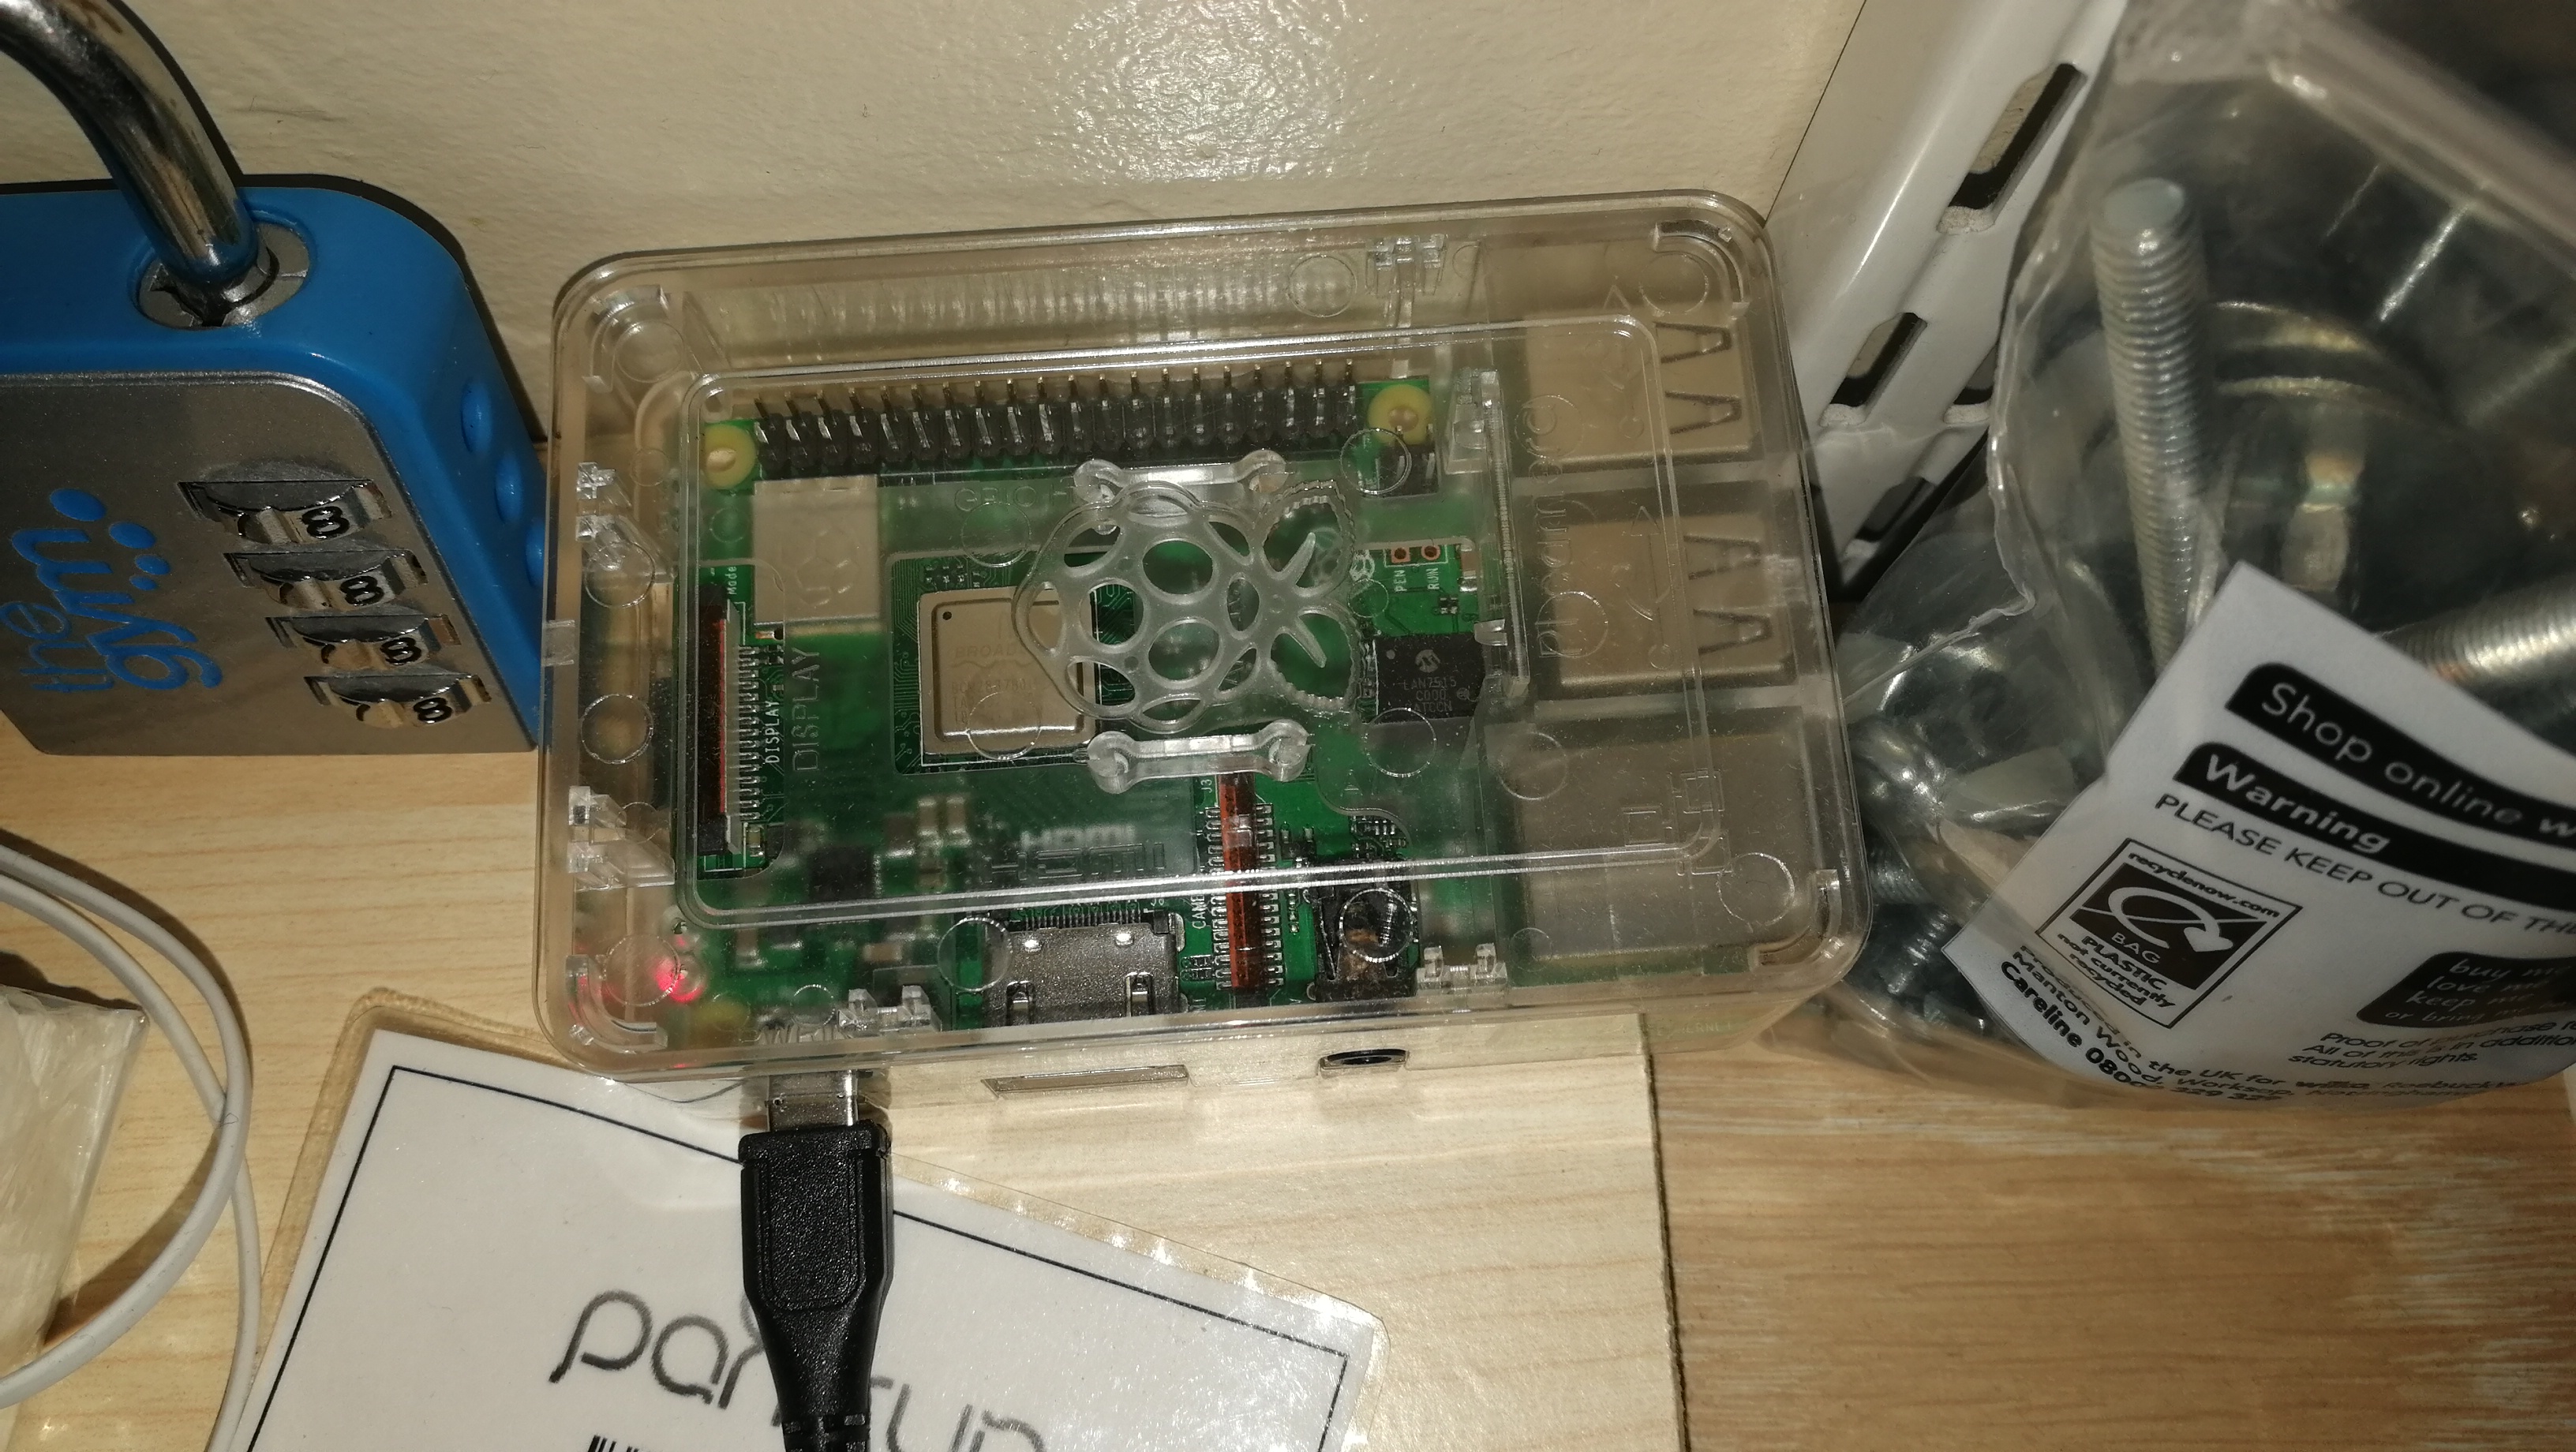 A powered up Raspberry Pi computer